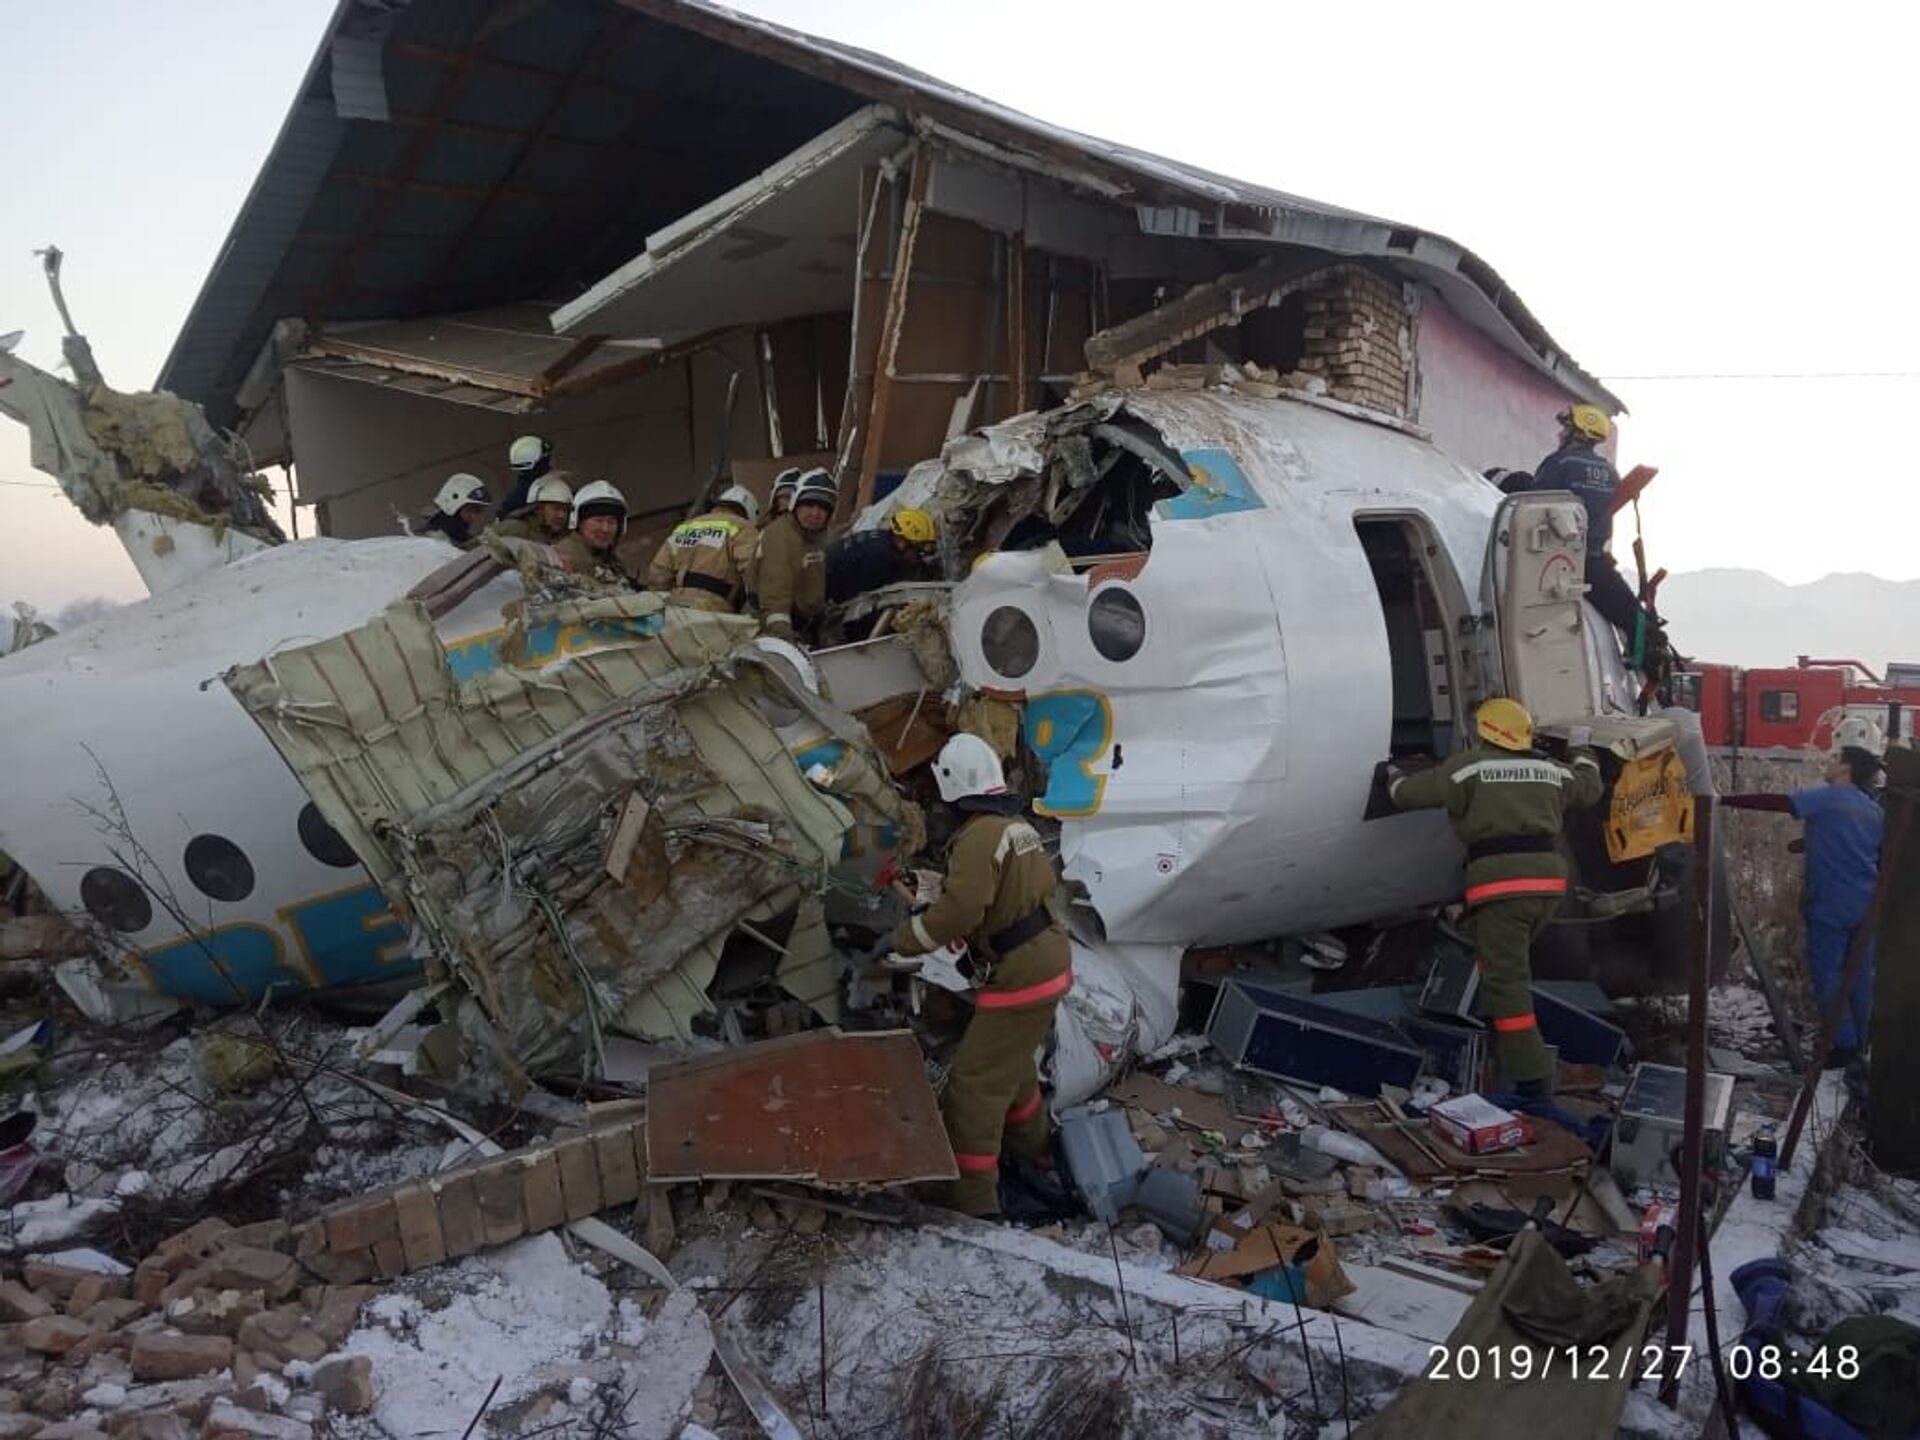 Первая авиакатастрофа. Катастрофа ту-154 в Алма-Ате. Air Fokker 100 bek авиакатастрофа. Катастрофа Fokker 100 под Алма-атой.